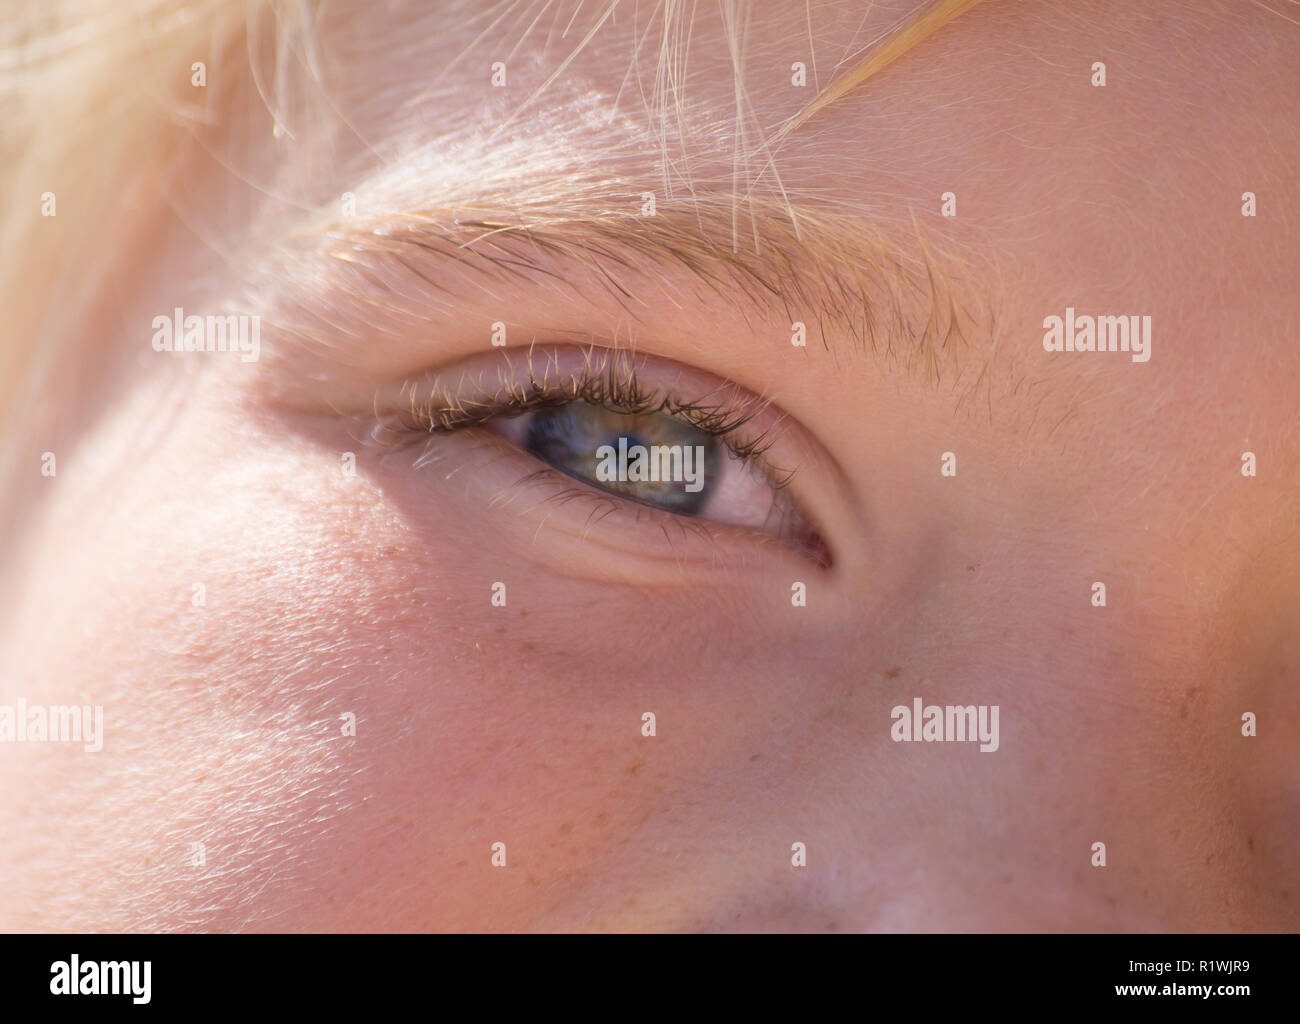 Close up of a boy’s eye Stock Photo